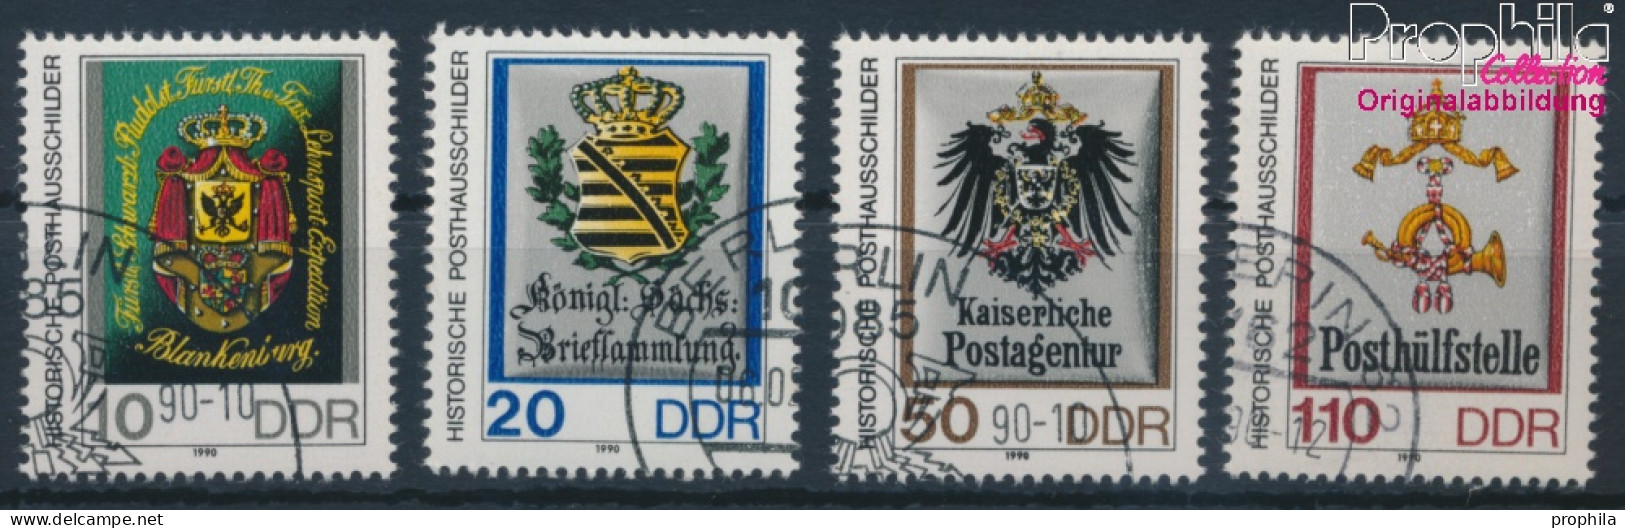 DDR 3302-3305 (kompl.Ausgabe) Gestempelt 1990 Posthausschilder Kleinformat (10405745 - Usados